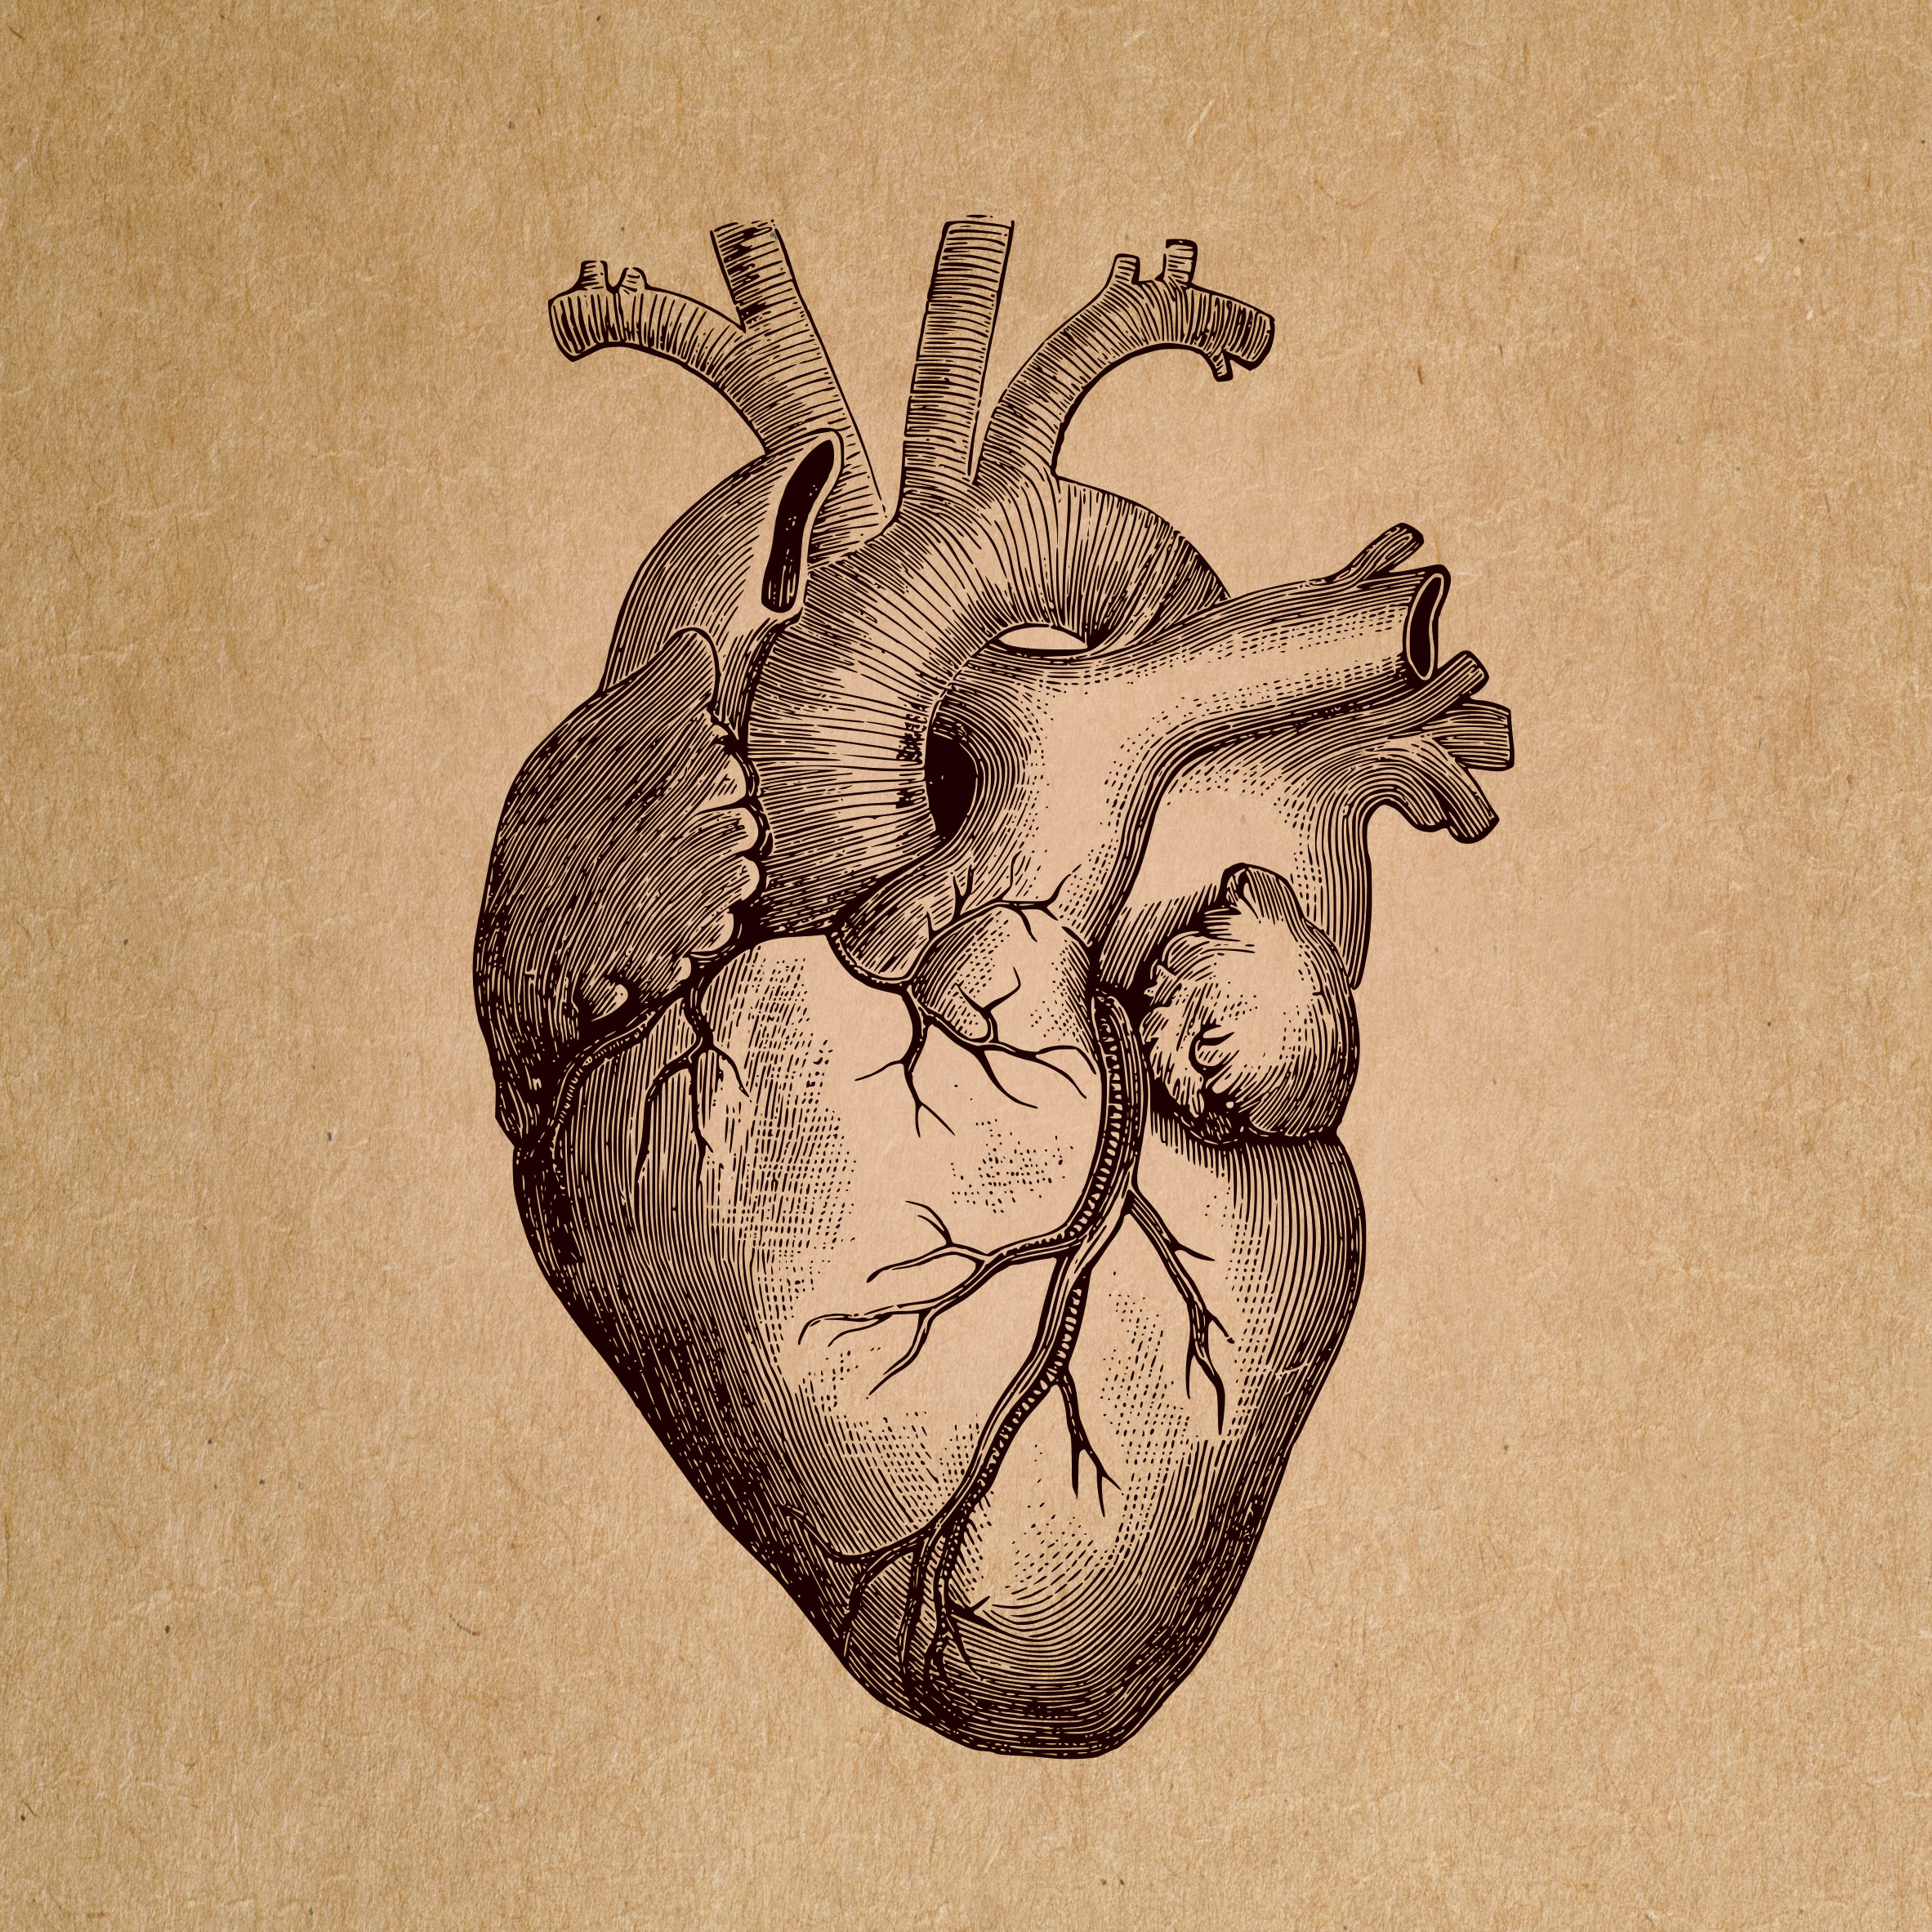 Human heart - anatomical rendering photo